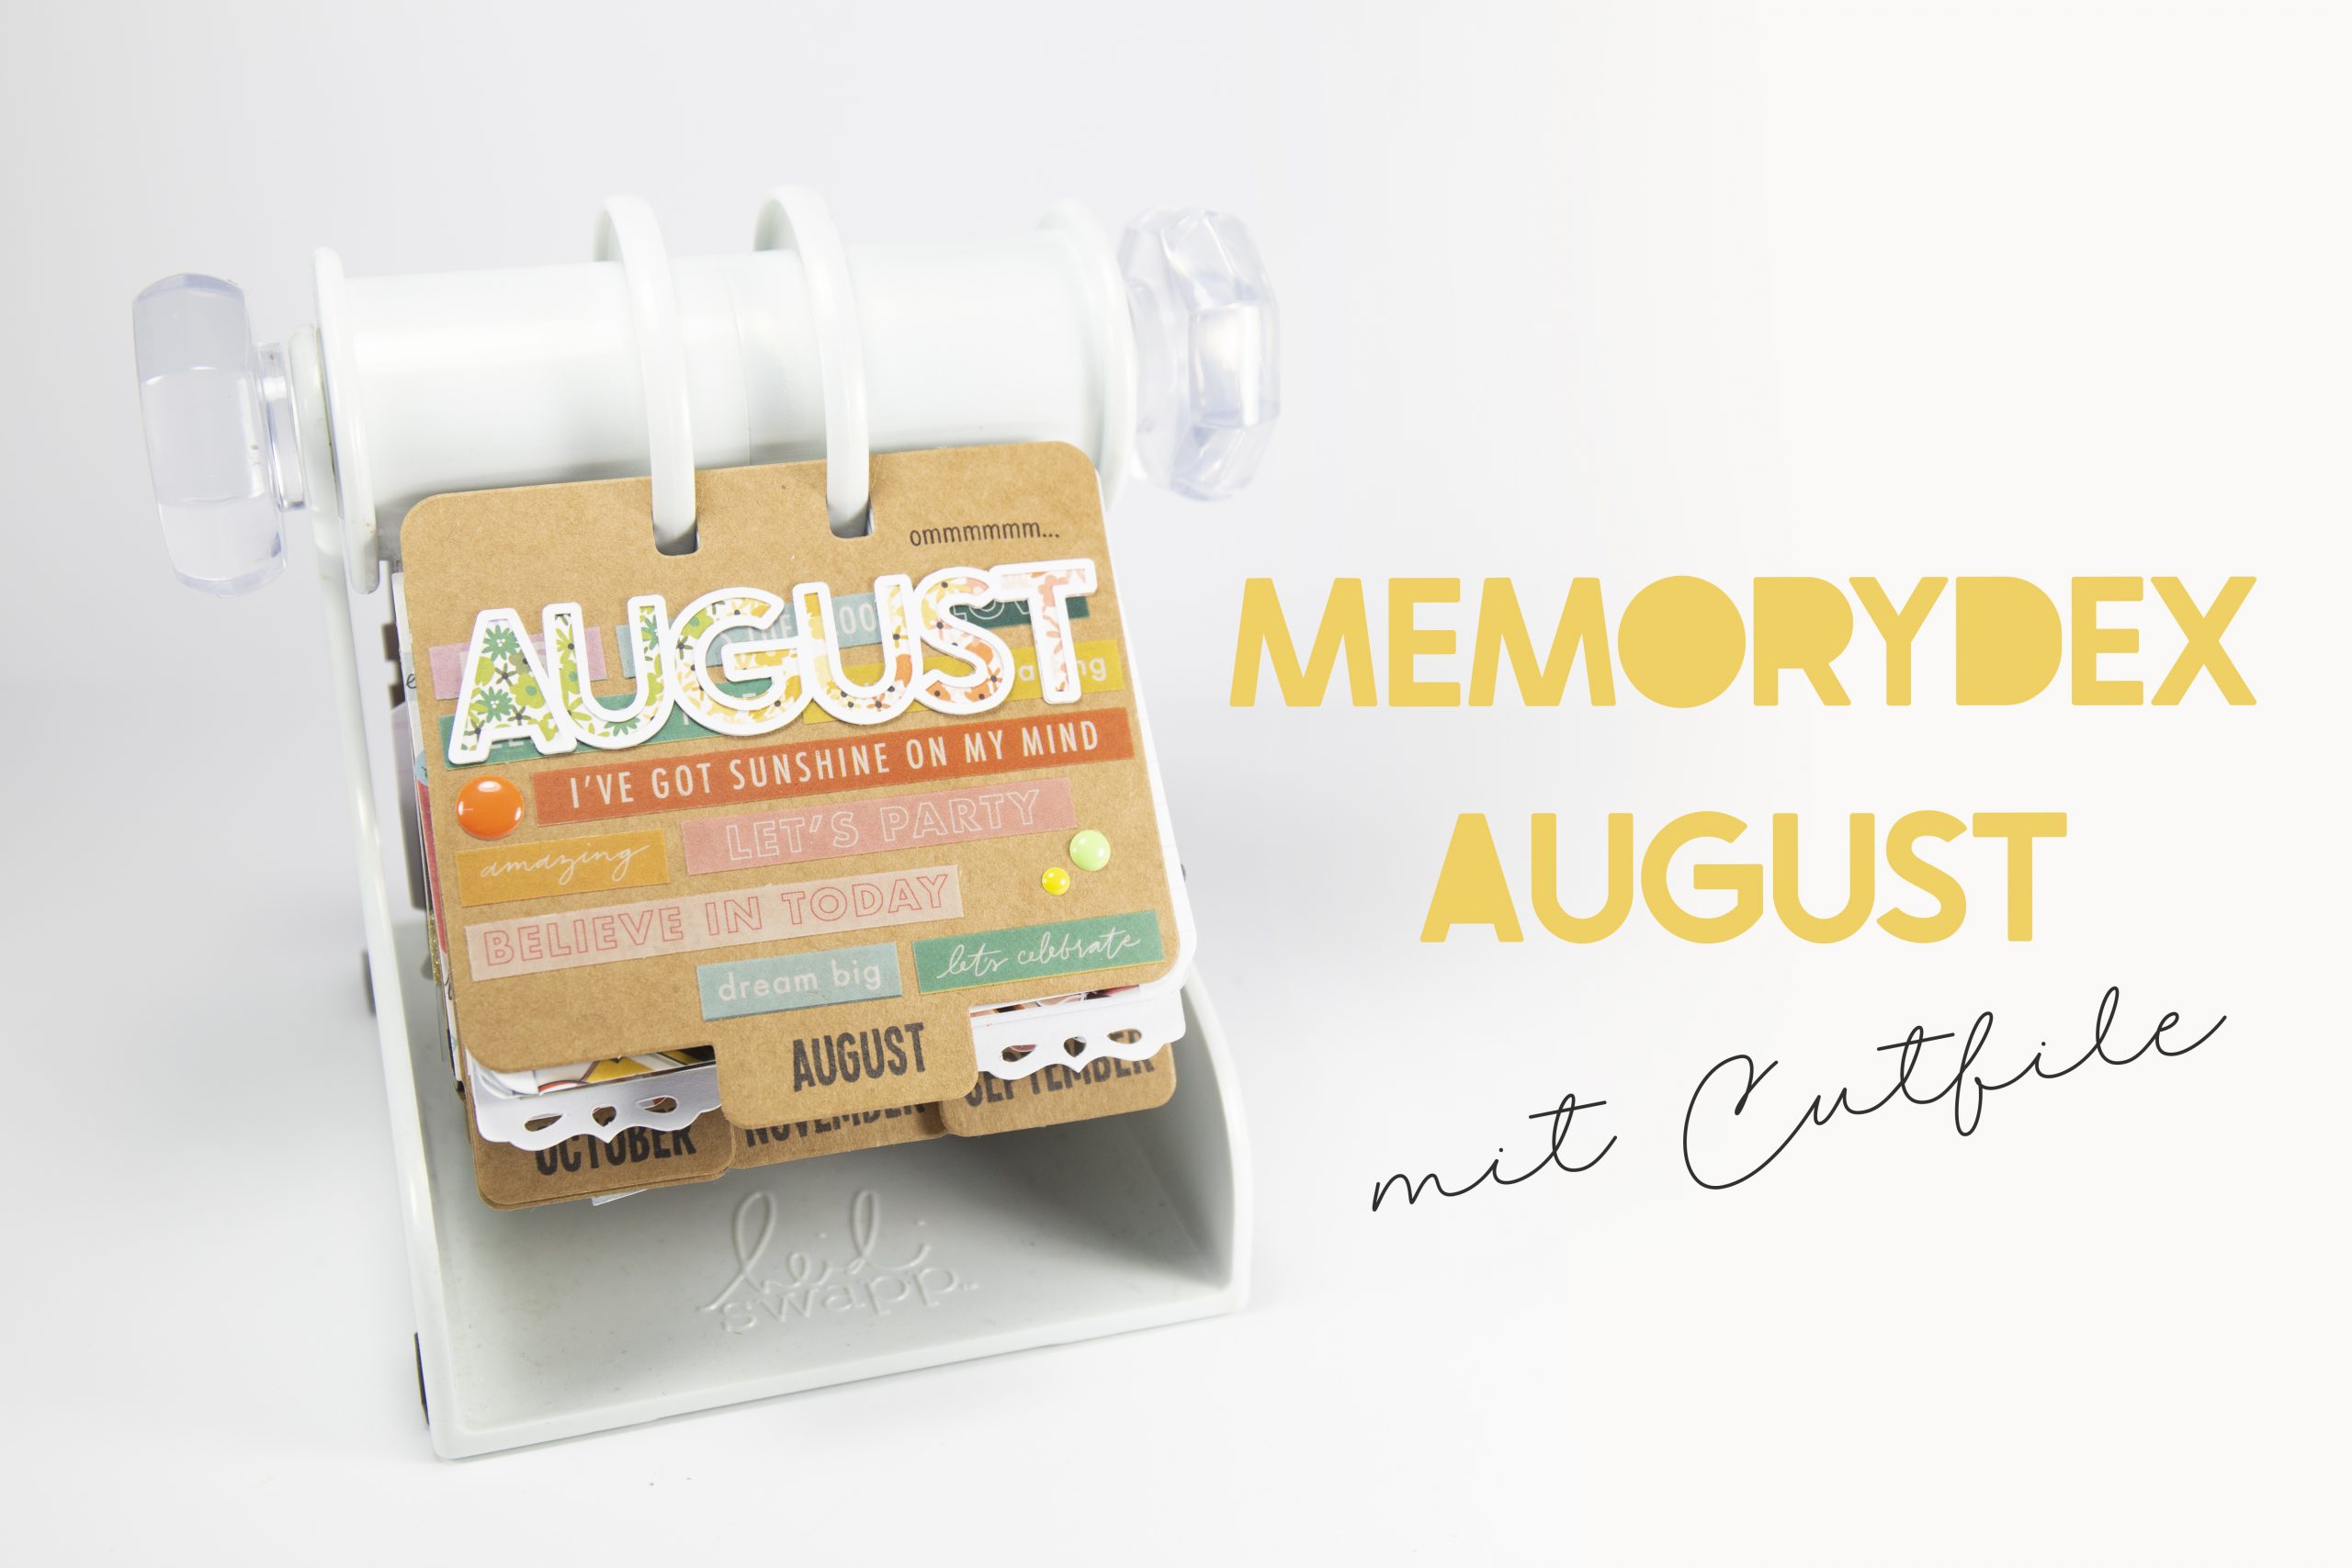 Memorydex August